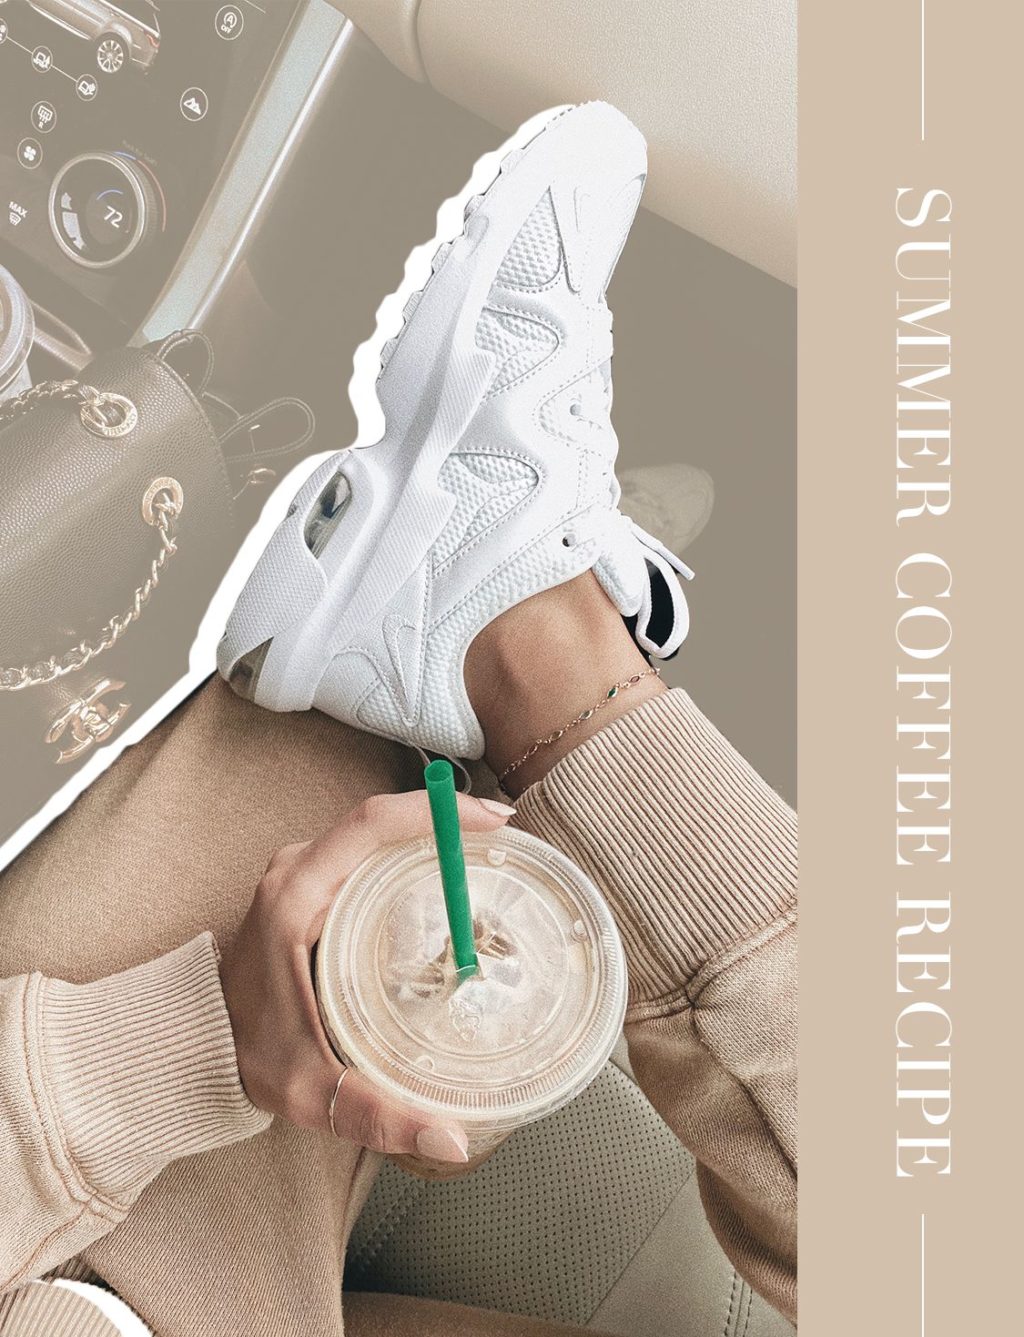 Starbucks Iced Coffee Recipes